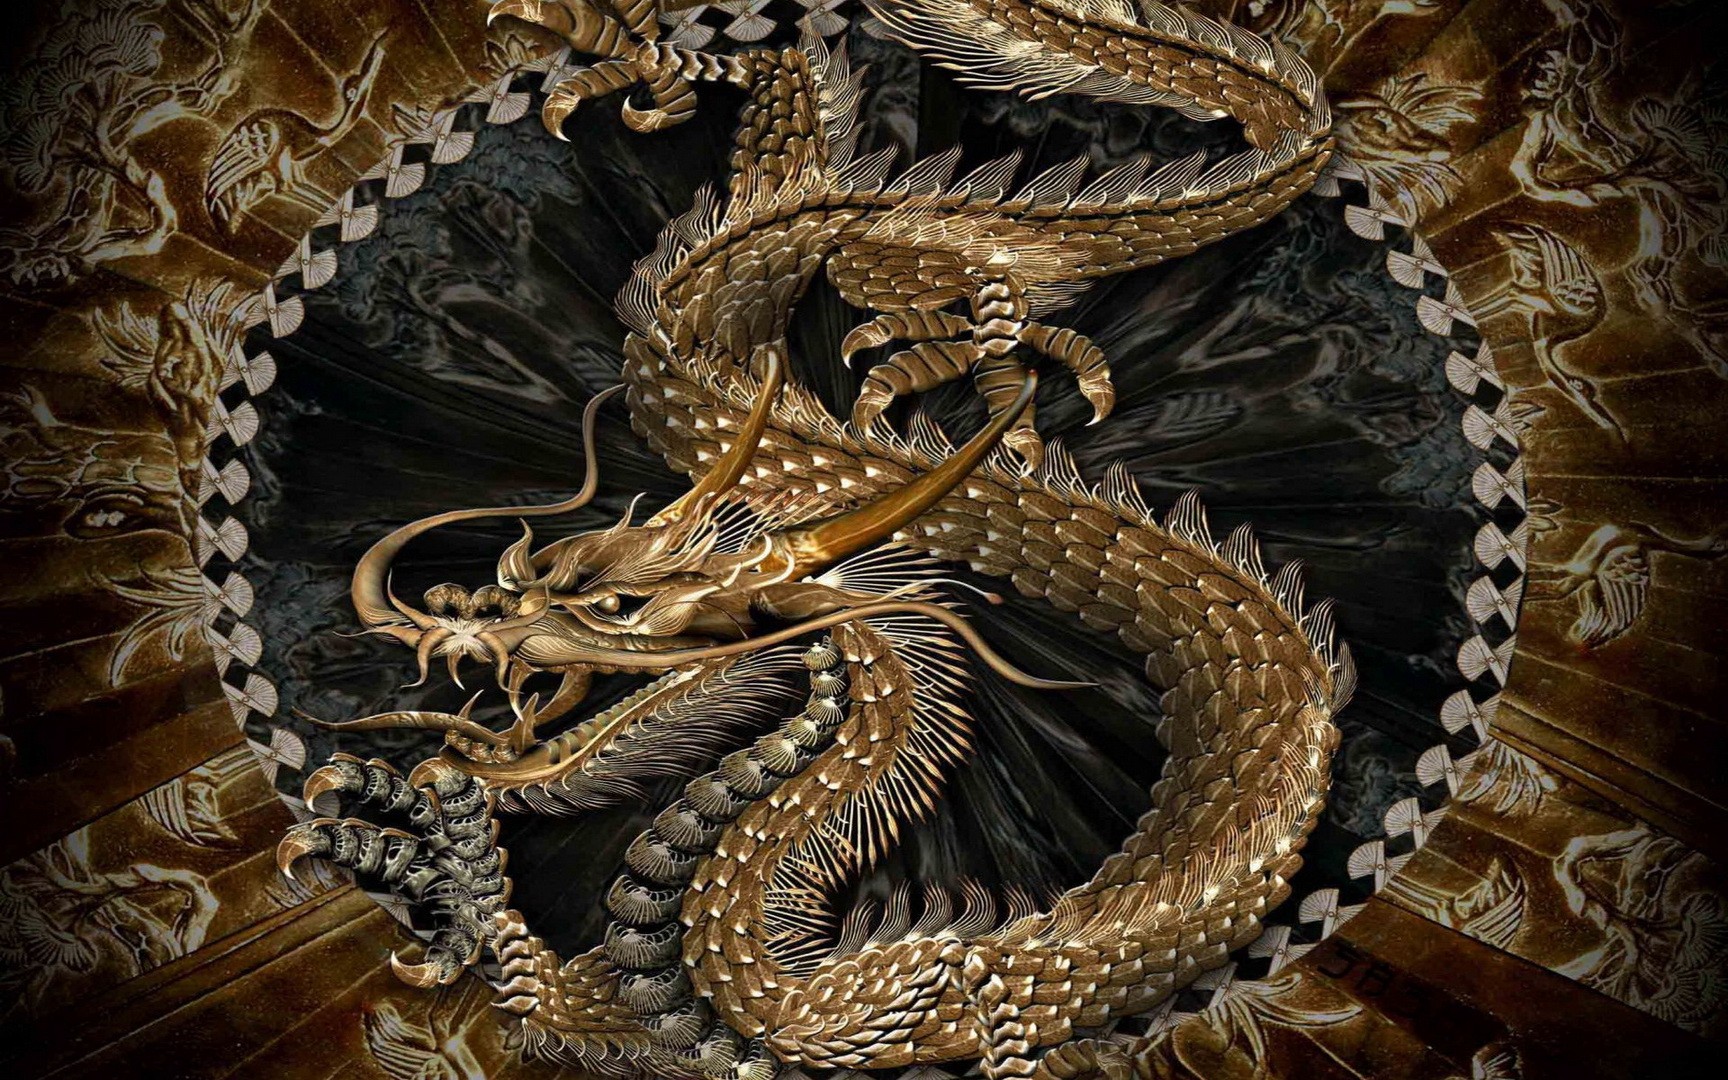 General 1728x1080 Chinese dragon dragon Asia fantasy art creature artwork